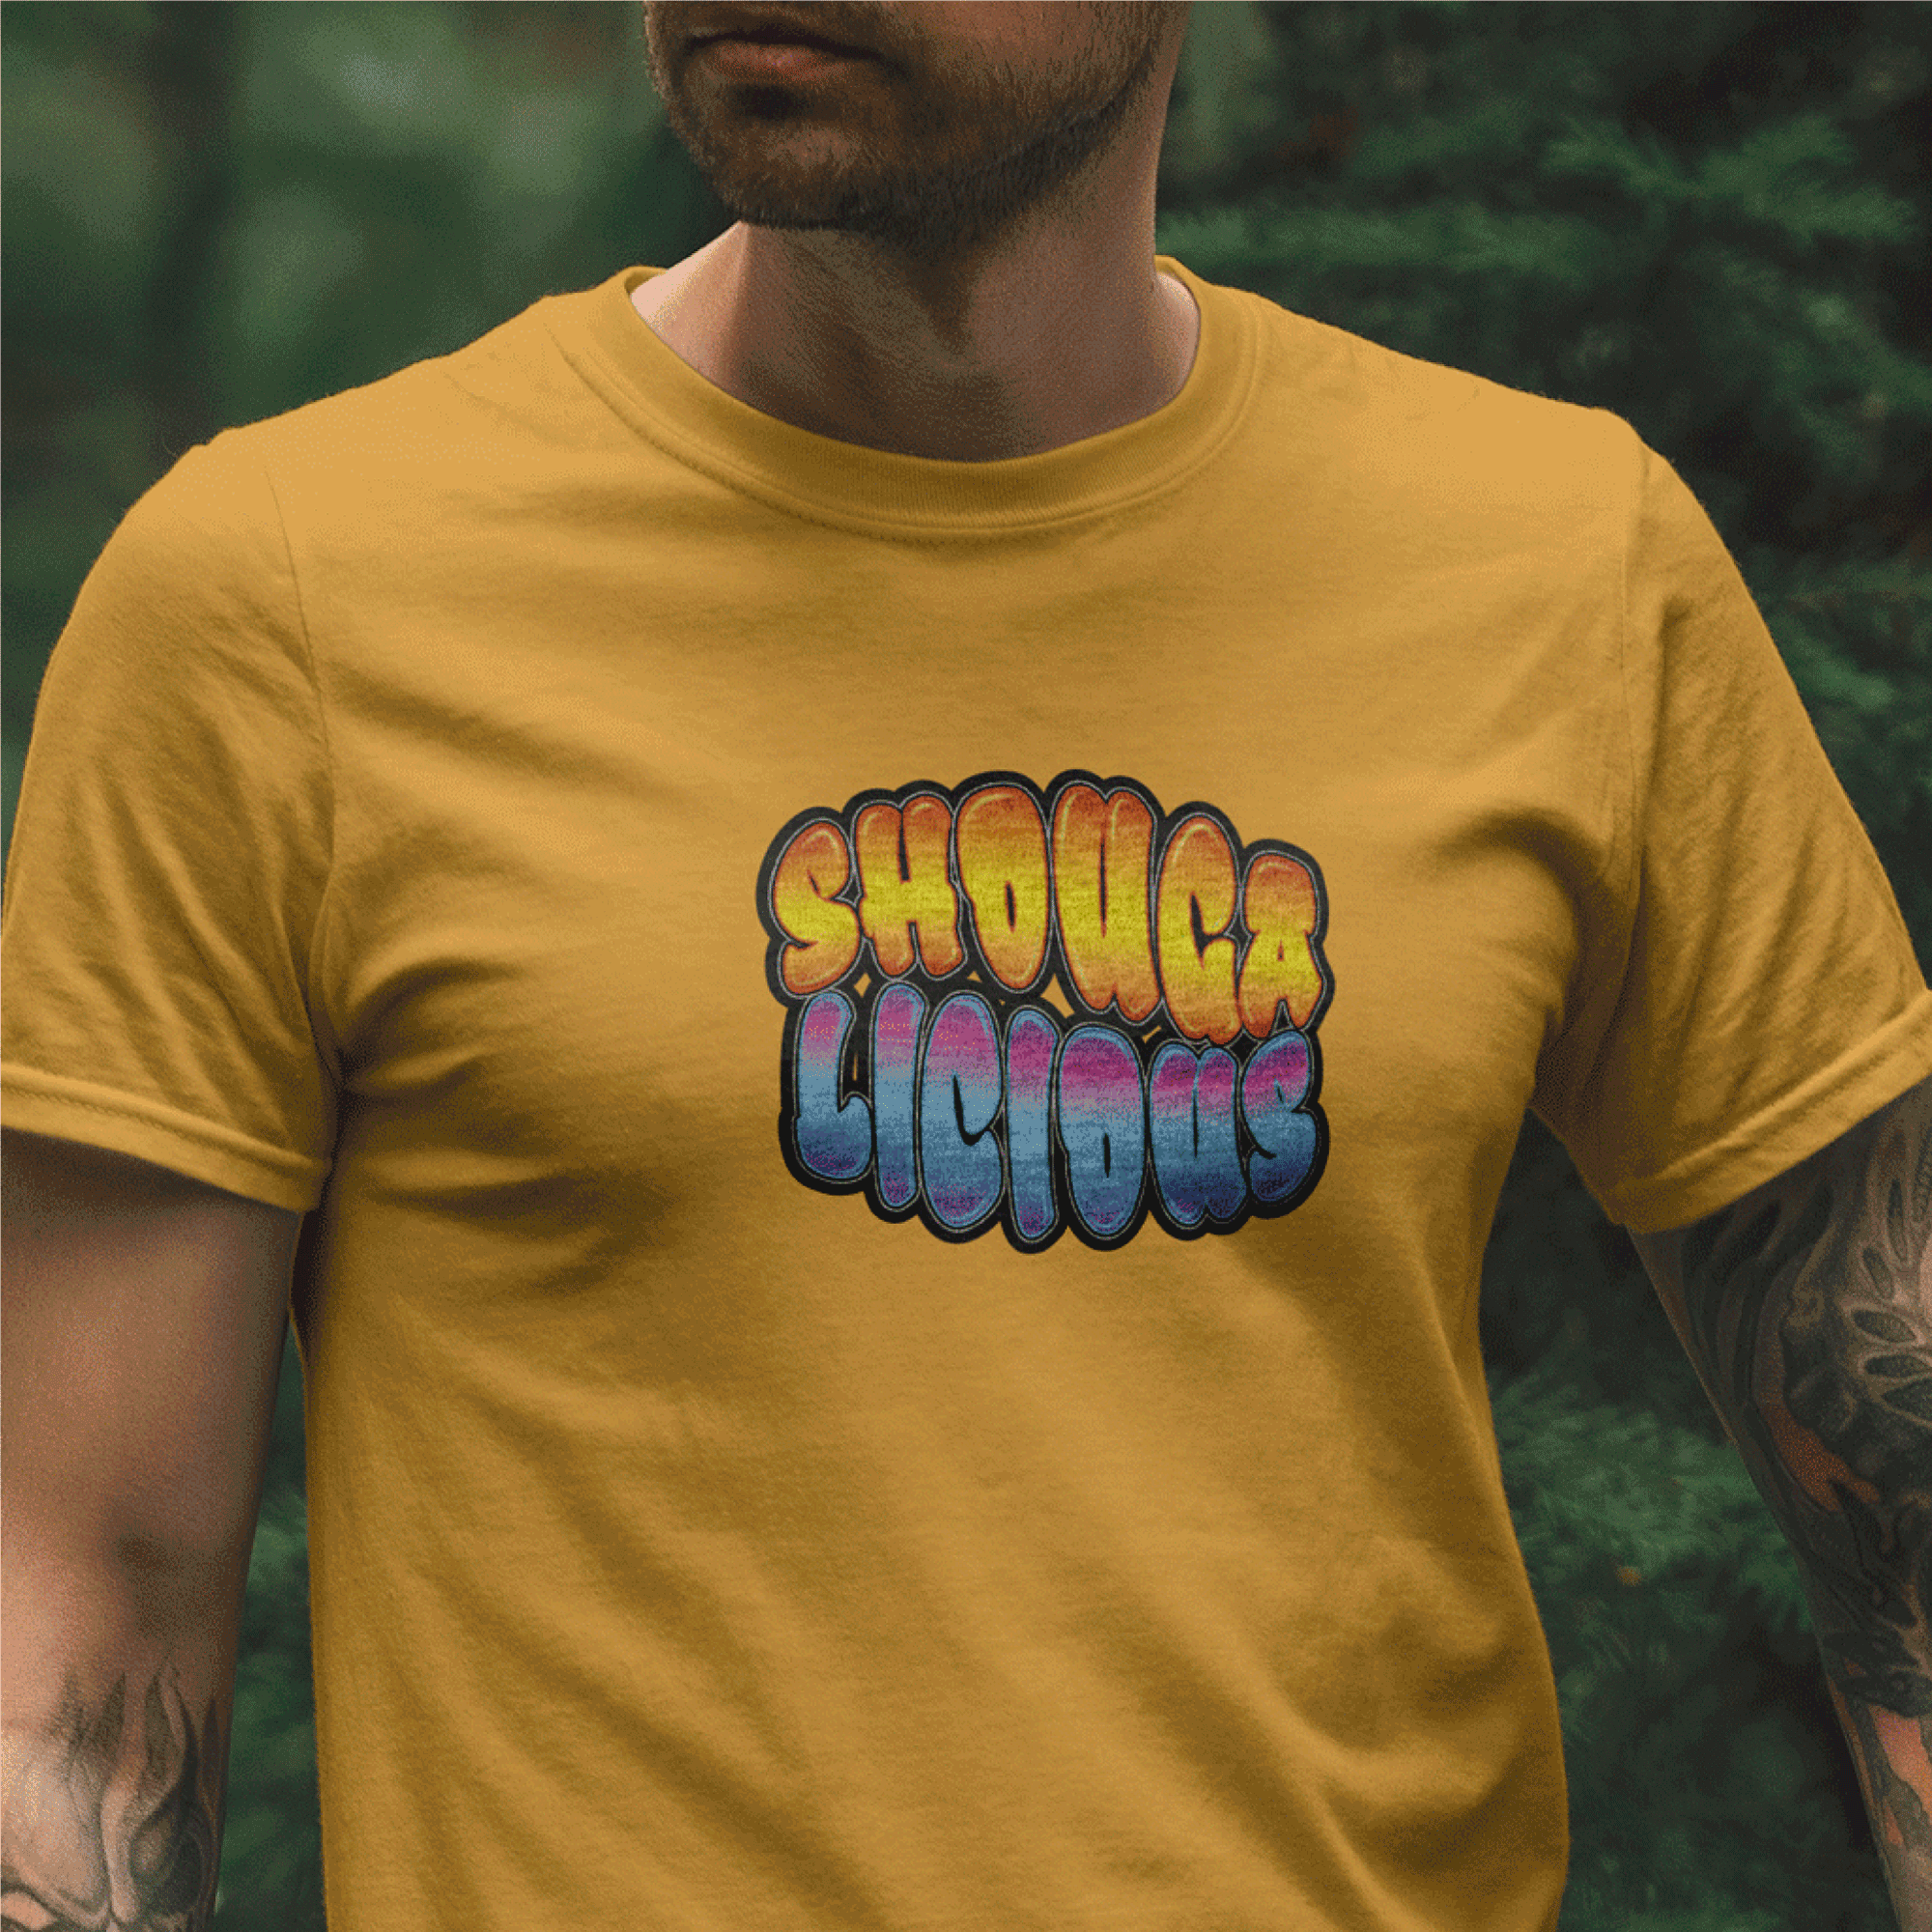 Shoug-A-Licious T-Shirt